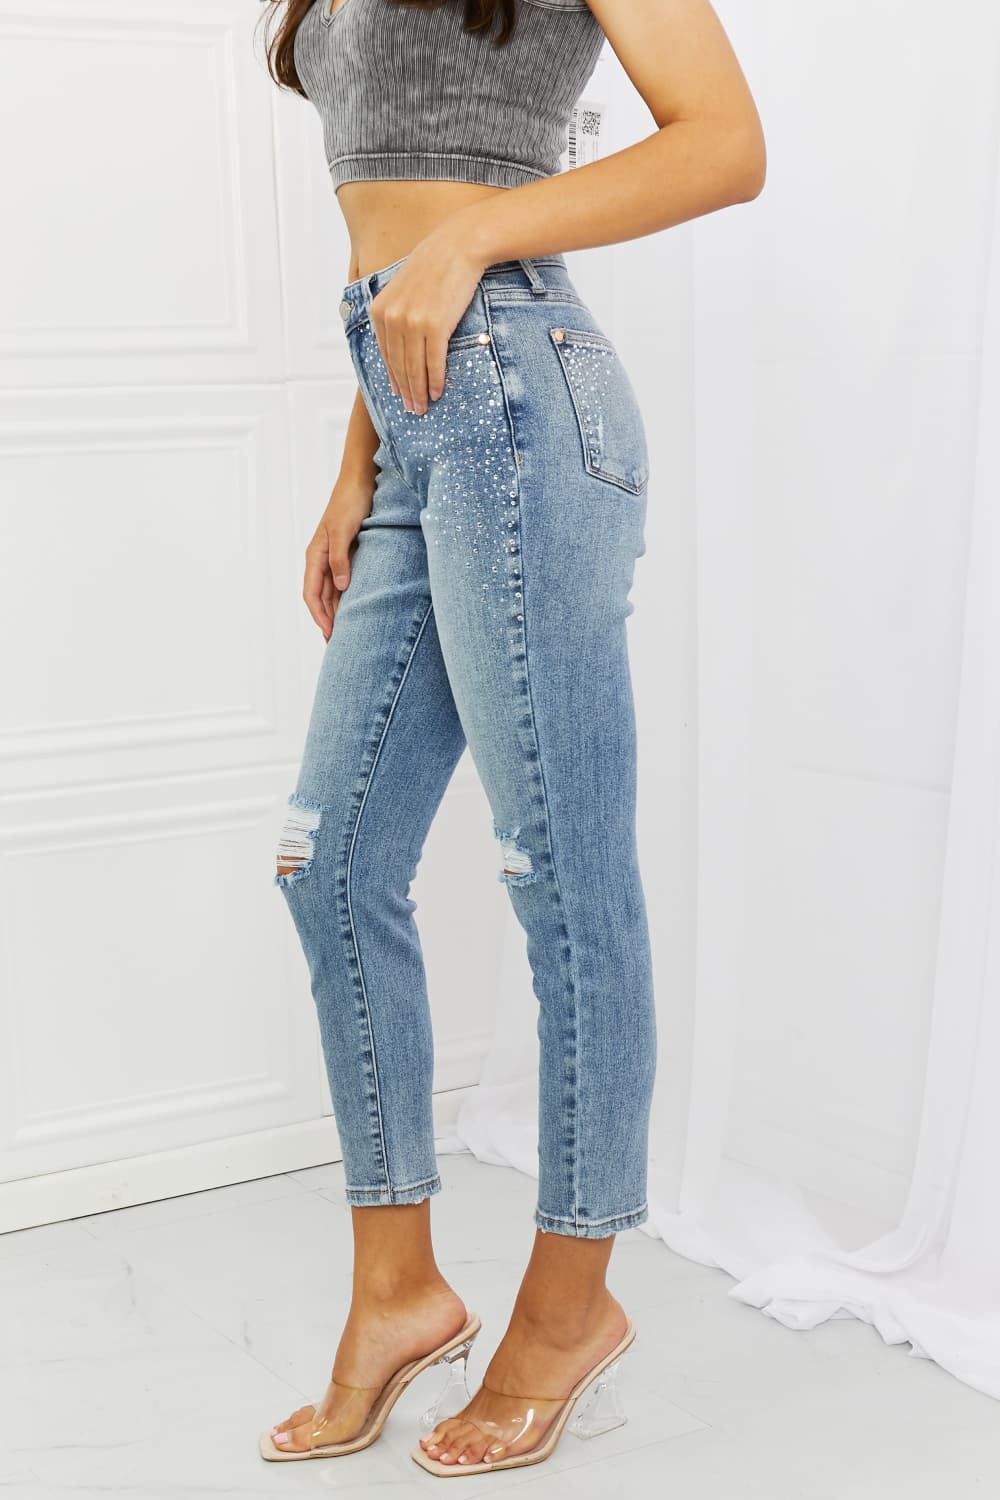 Judy Blue Kate Full Size Slim Fit Rhinestone Jeans